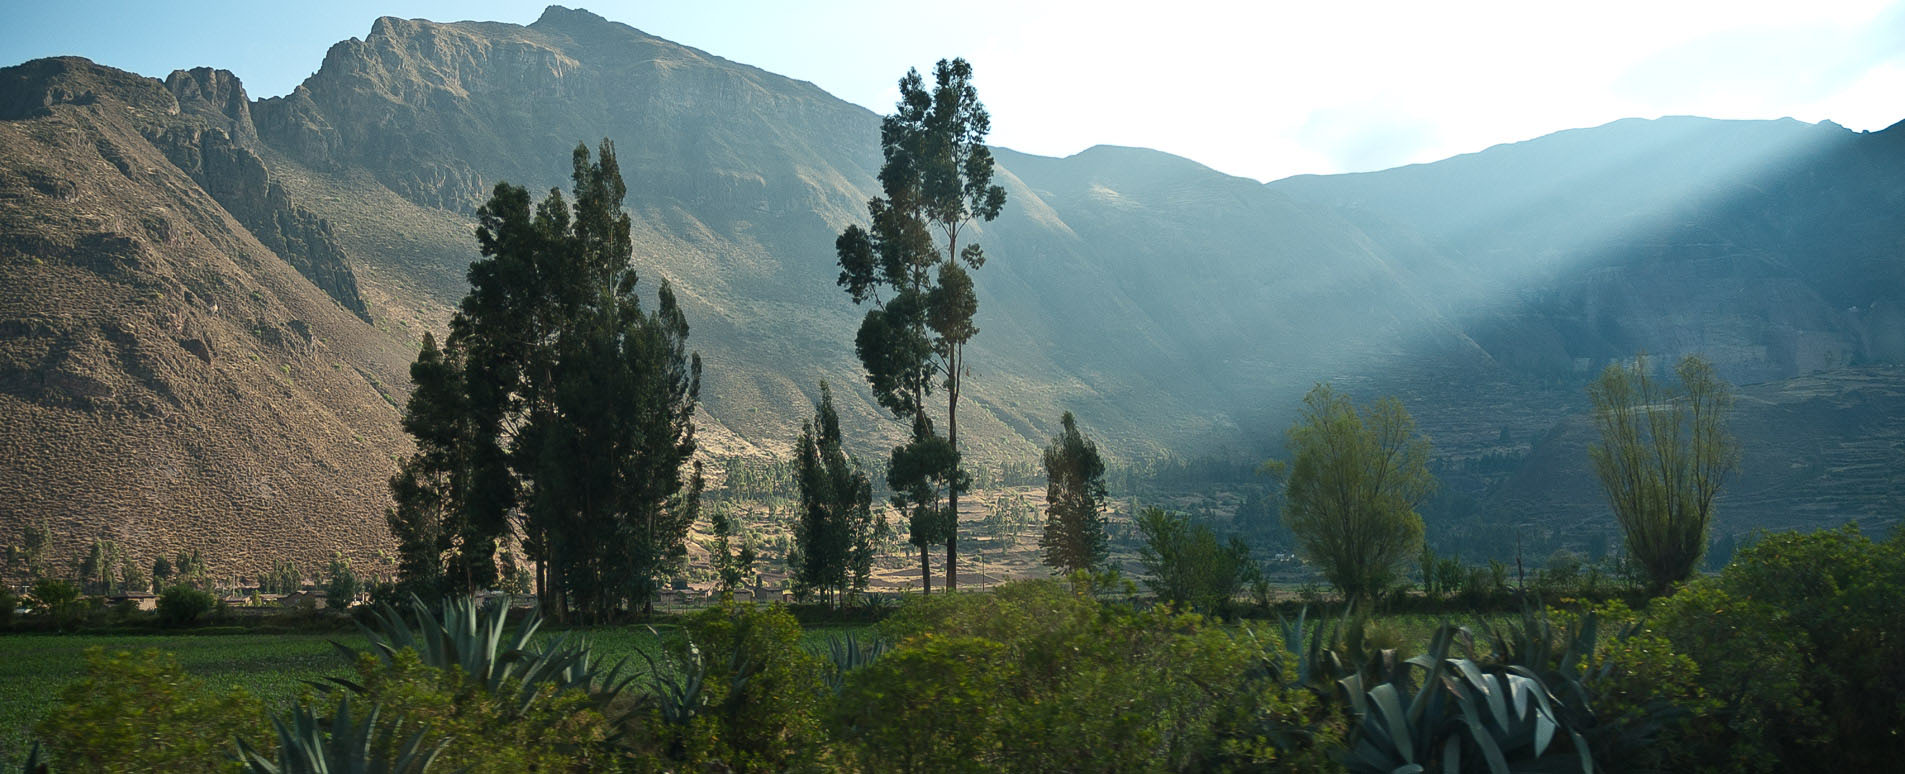 peru sacred valley